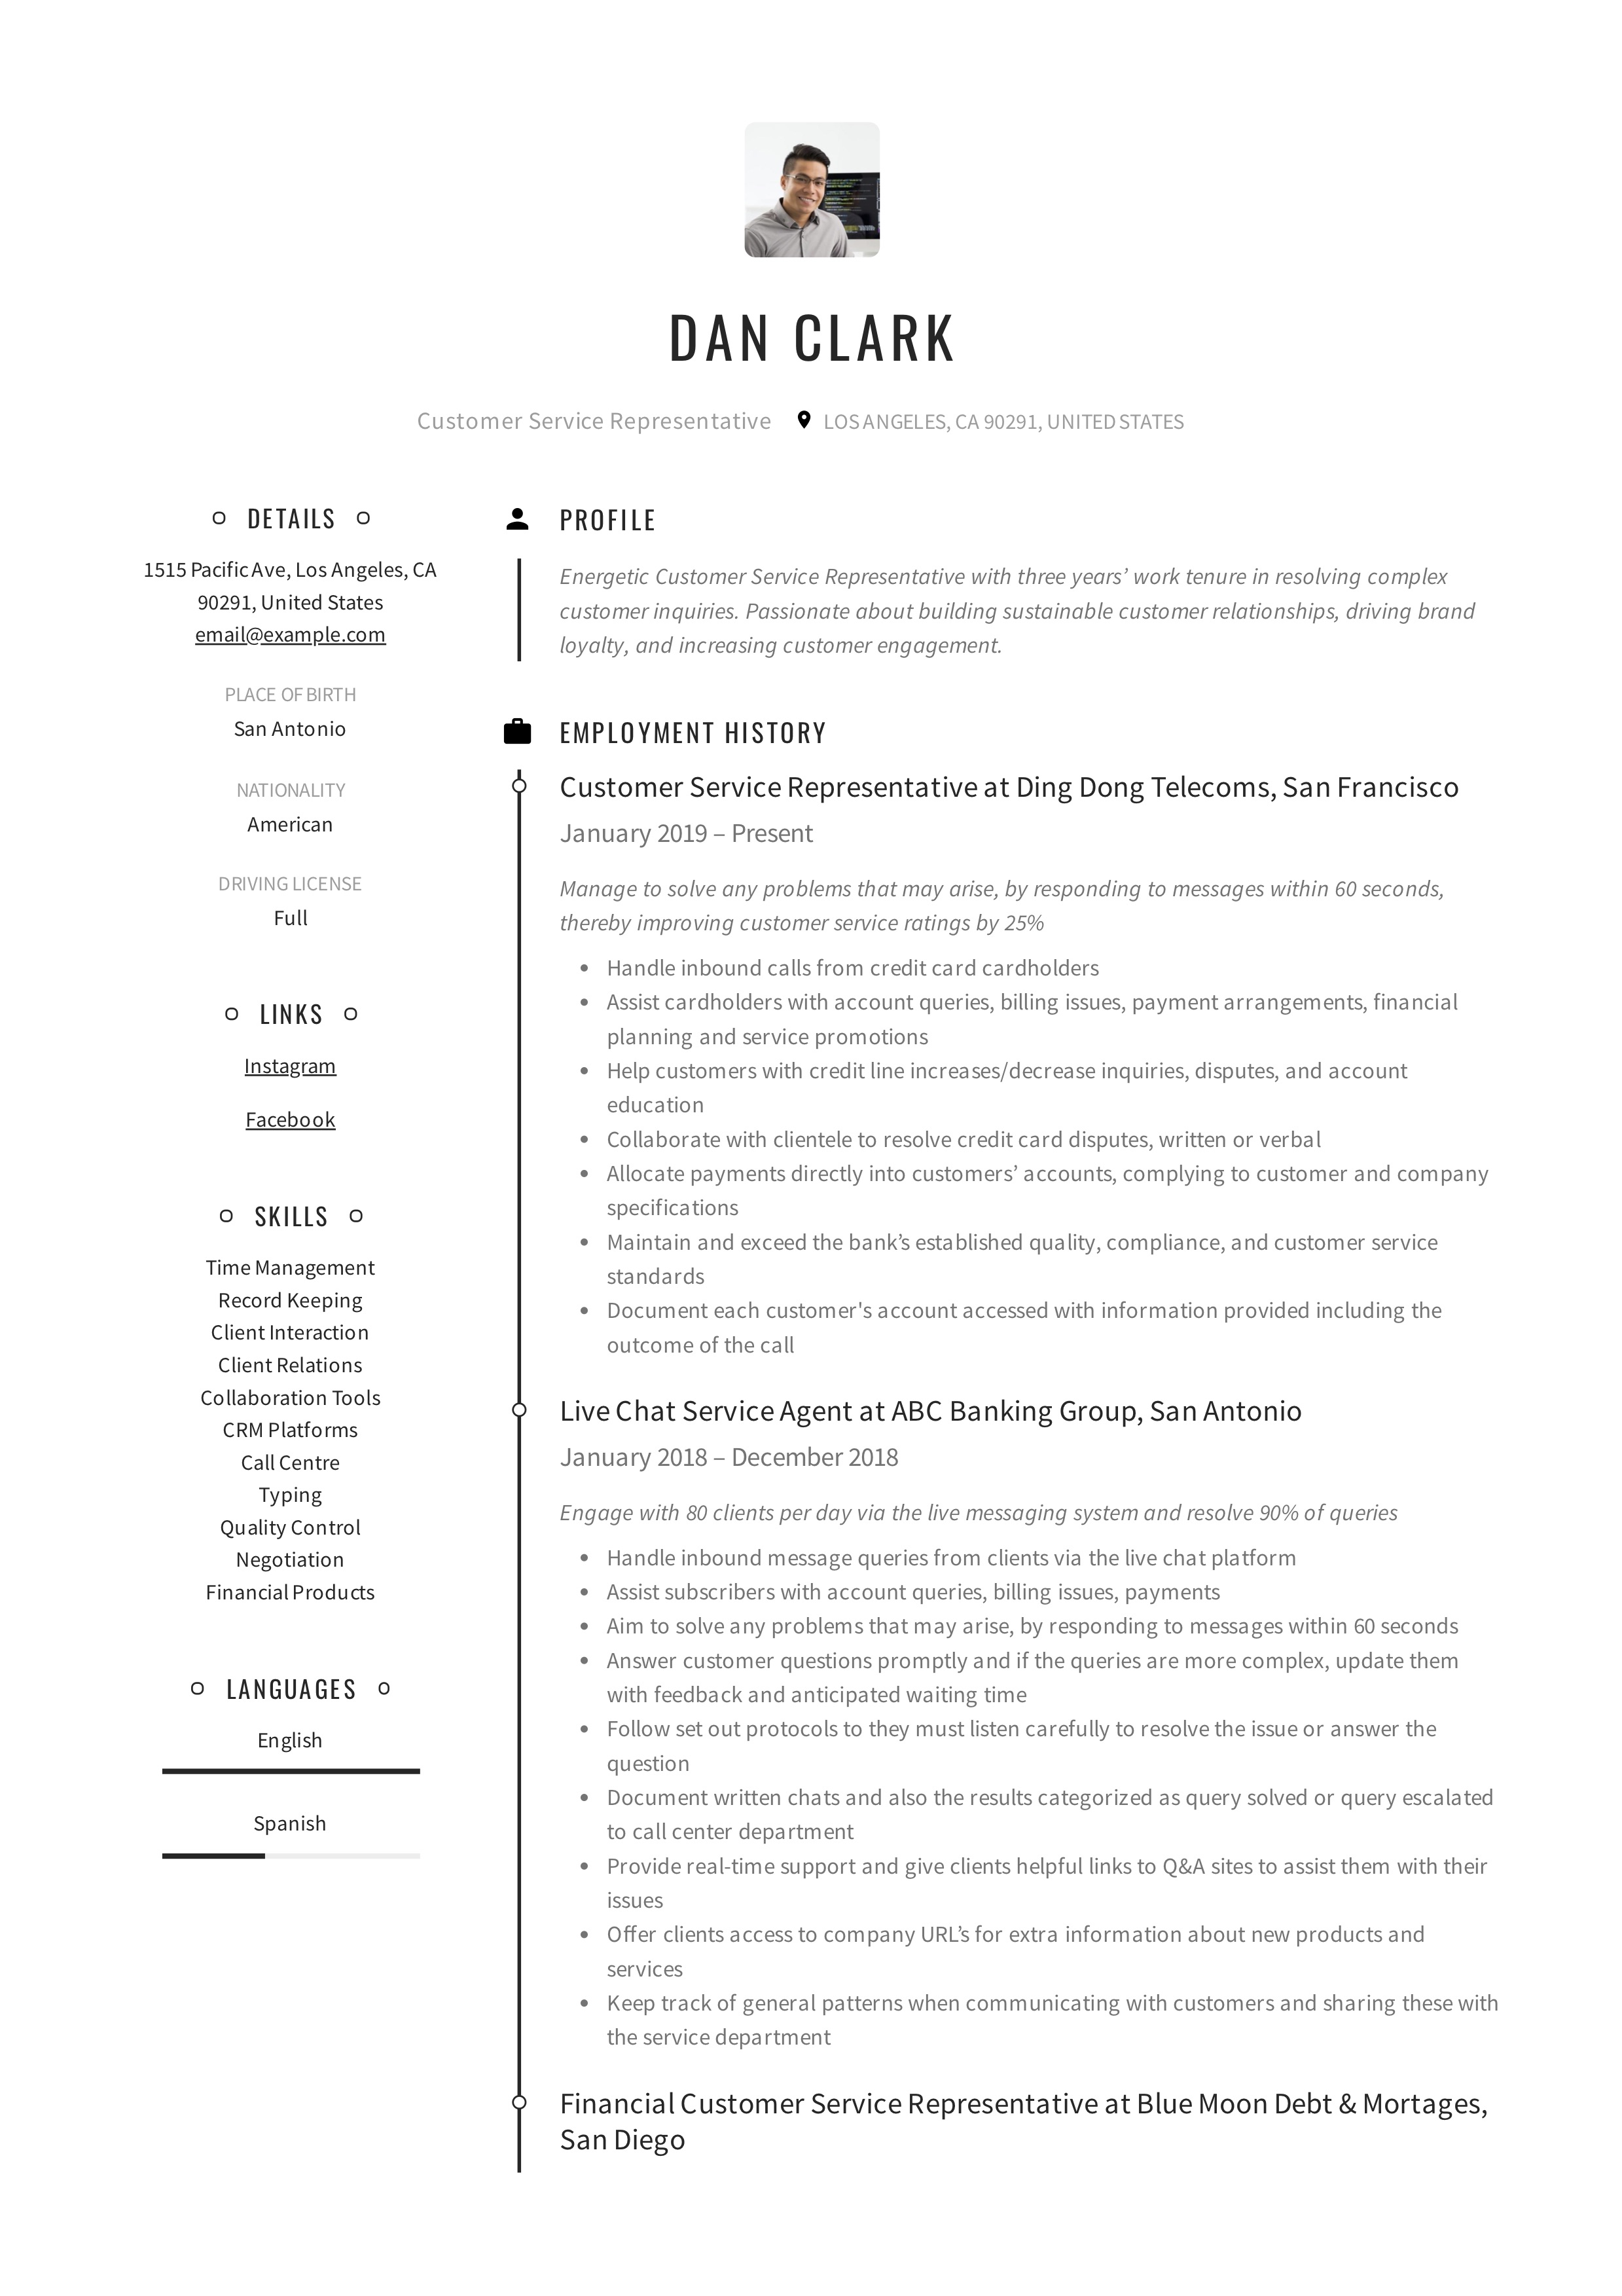 Resume For Customer Service Customer Service Representative Resume 1 resume for customer service|wikiresume.com